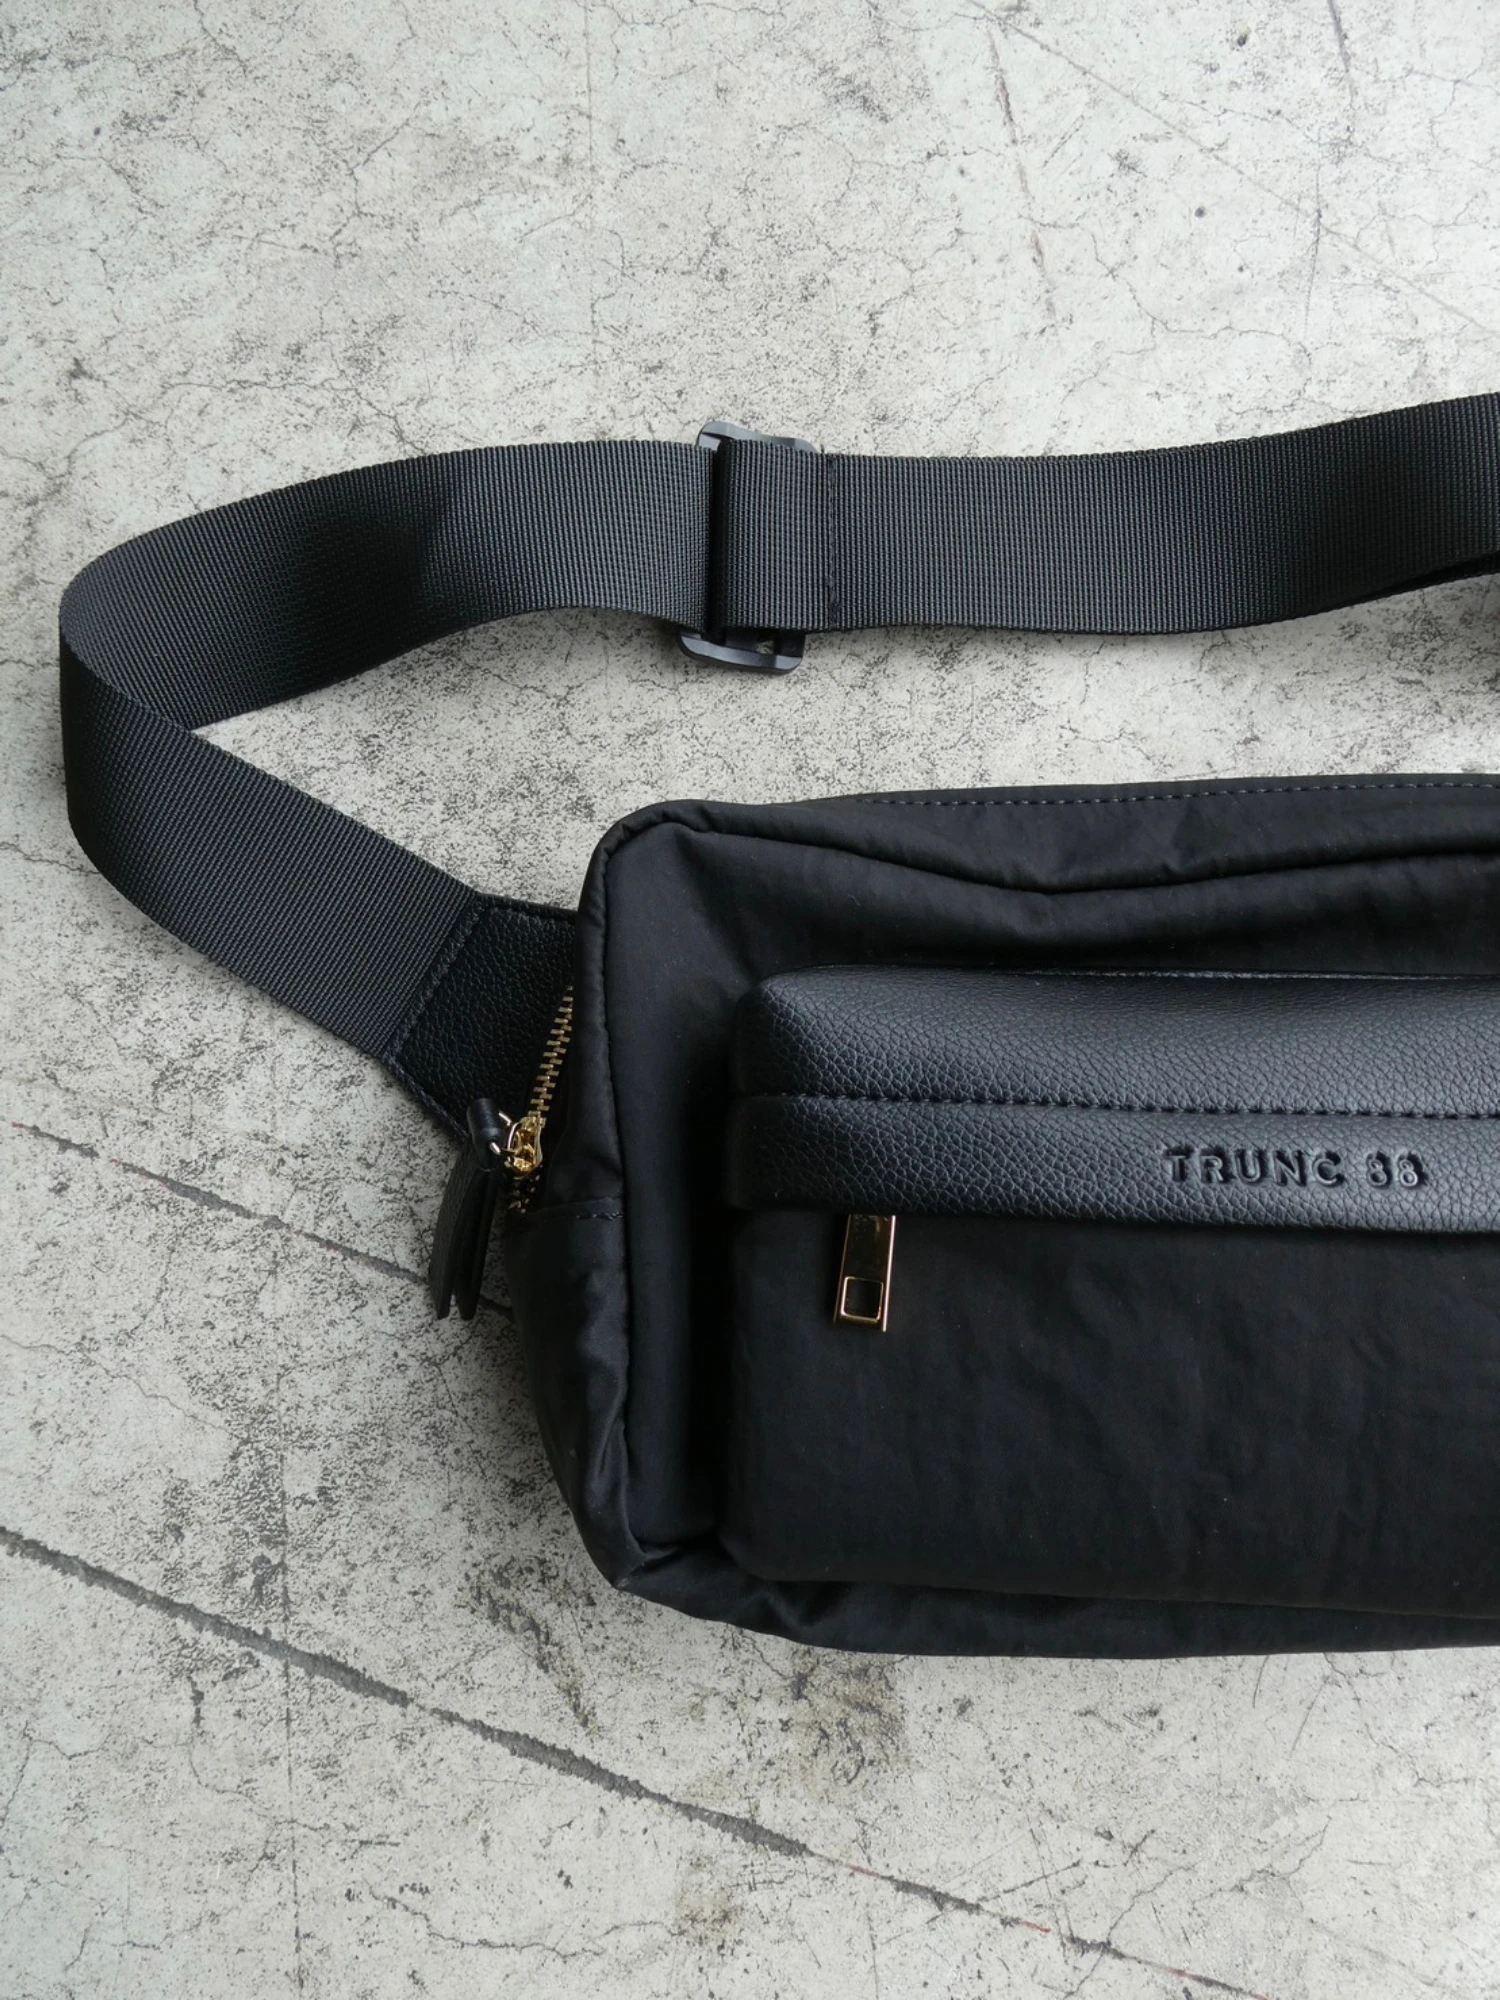 2022 新作 trunc88 Leather Combi Body Bag